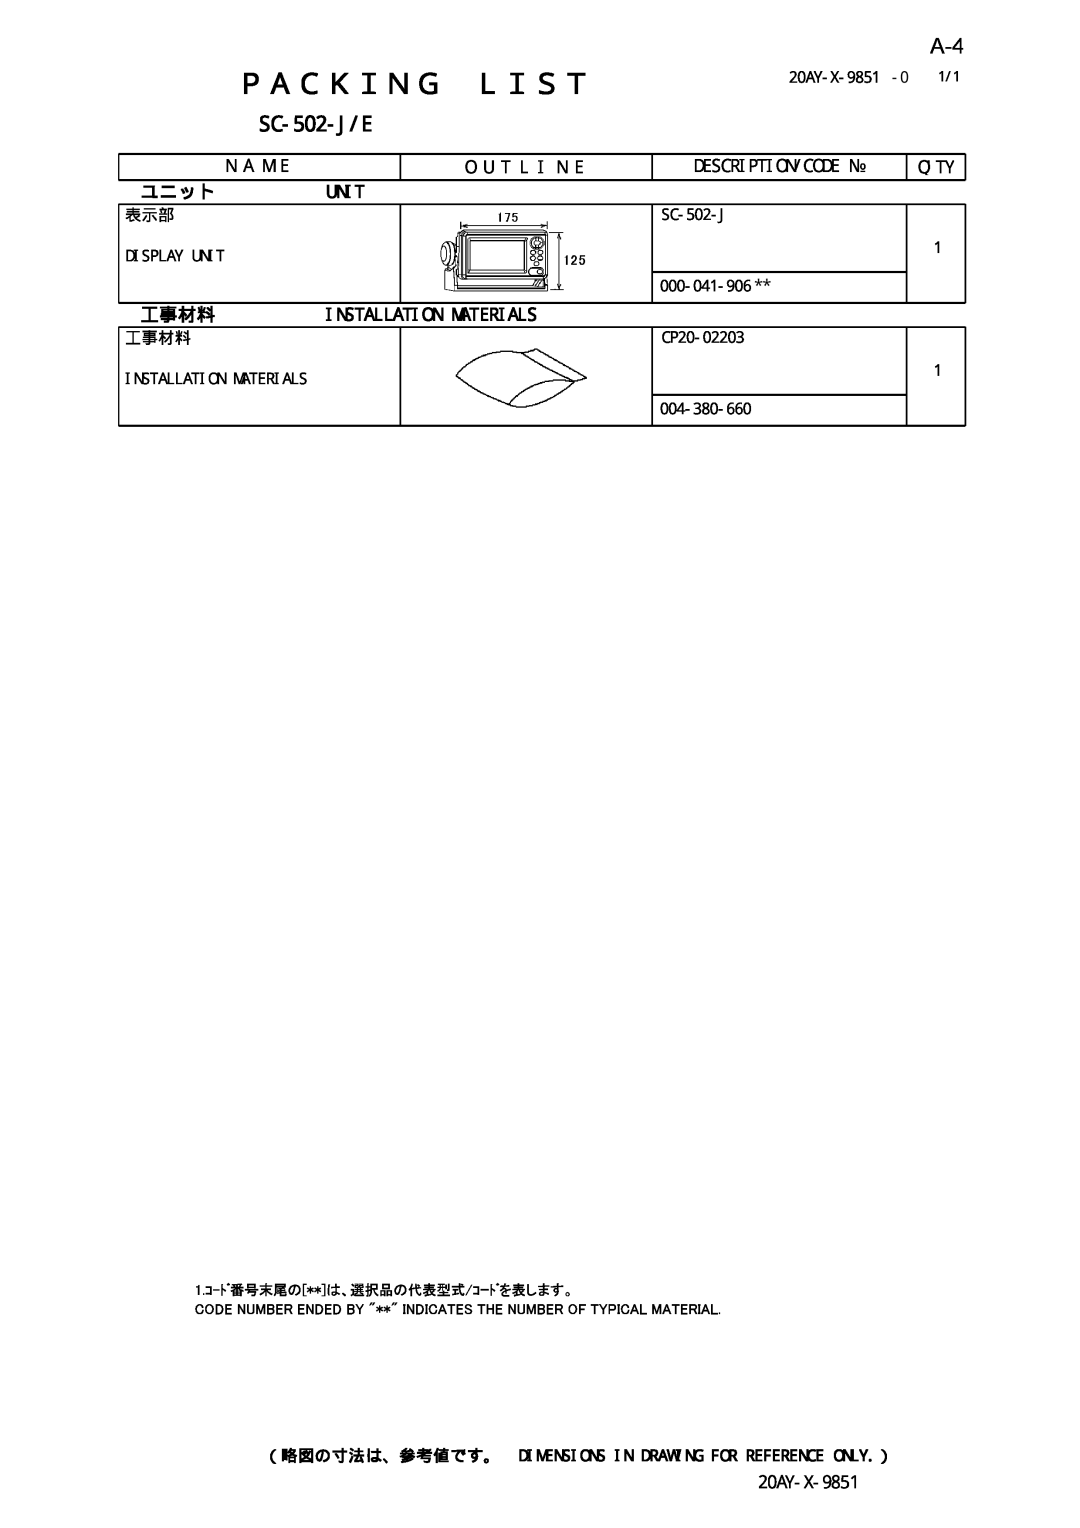 Furuno SC-110 manual SC-502-J/E, Ｐａｃｋｉｎｇ, Ｌｉｓｔ, ユニット, 工事材料 